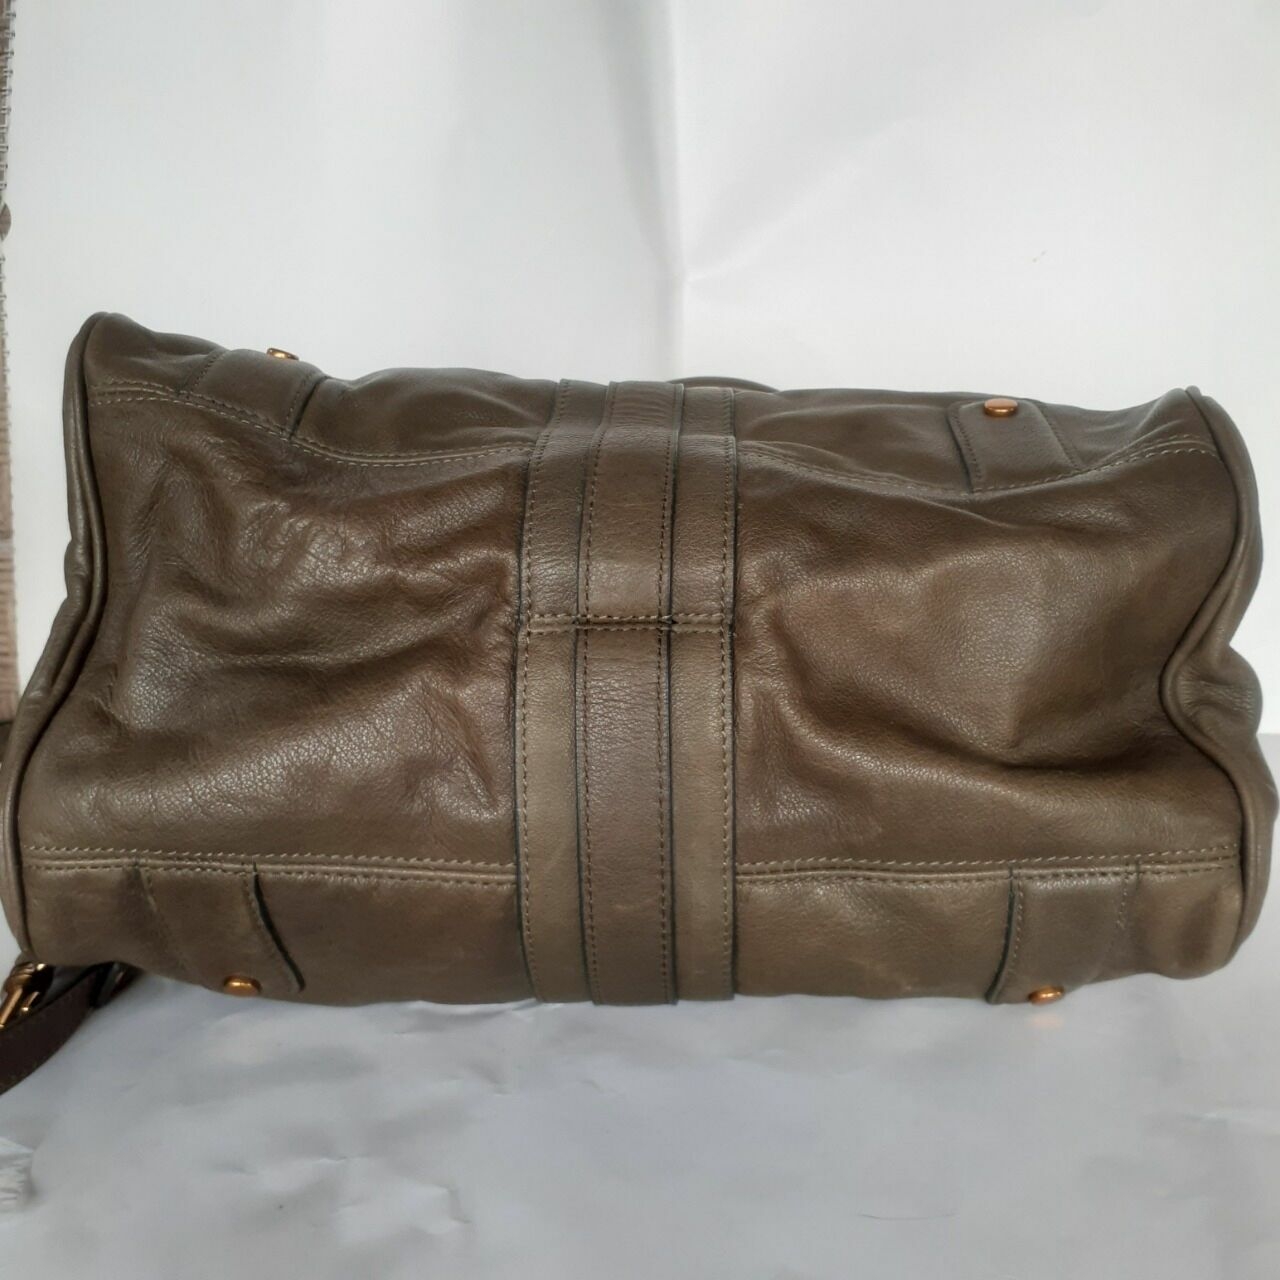 Rabeanco Olive Leather Handbag